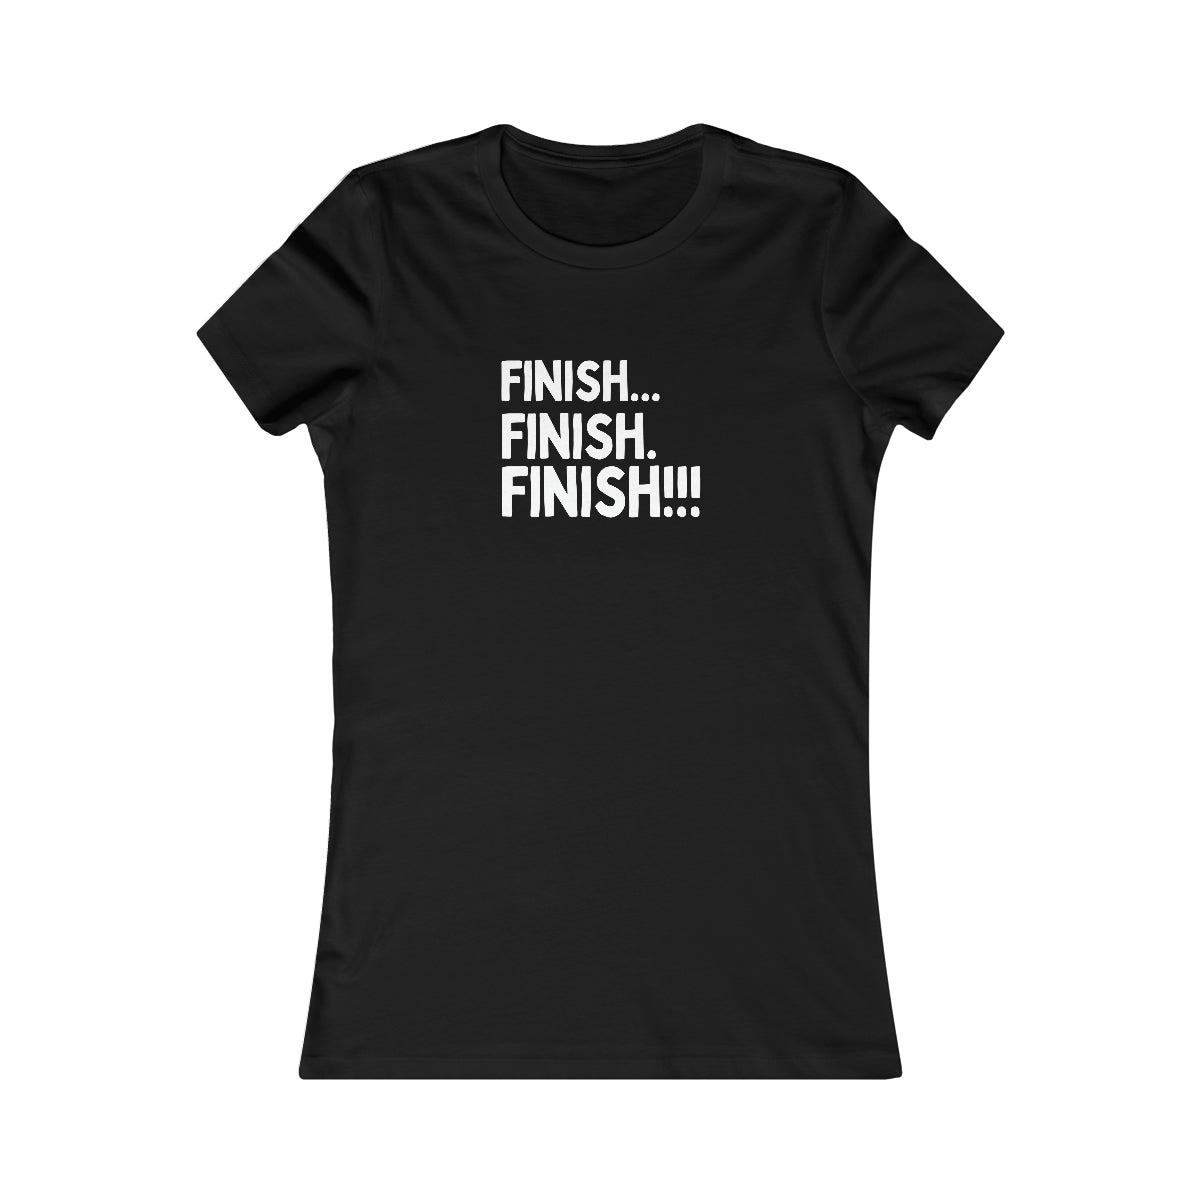 Finish... Finish. Finish!!! - Deaf Bing Tees - Women's Favorite Tee